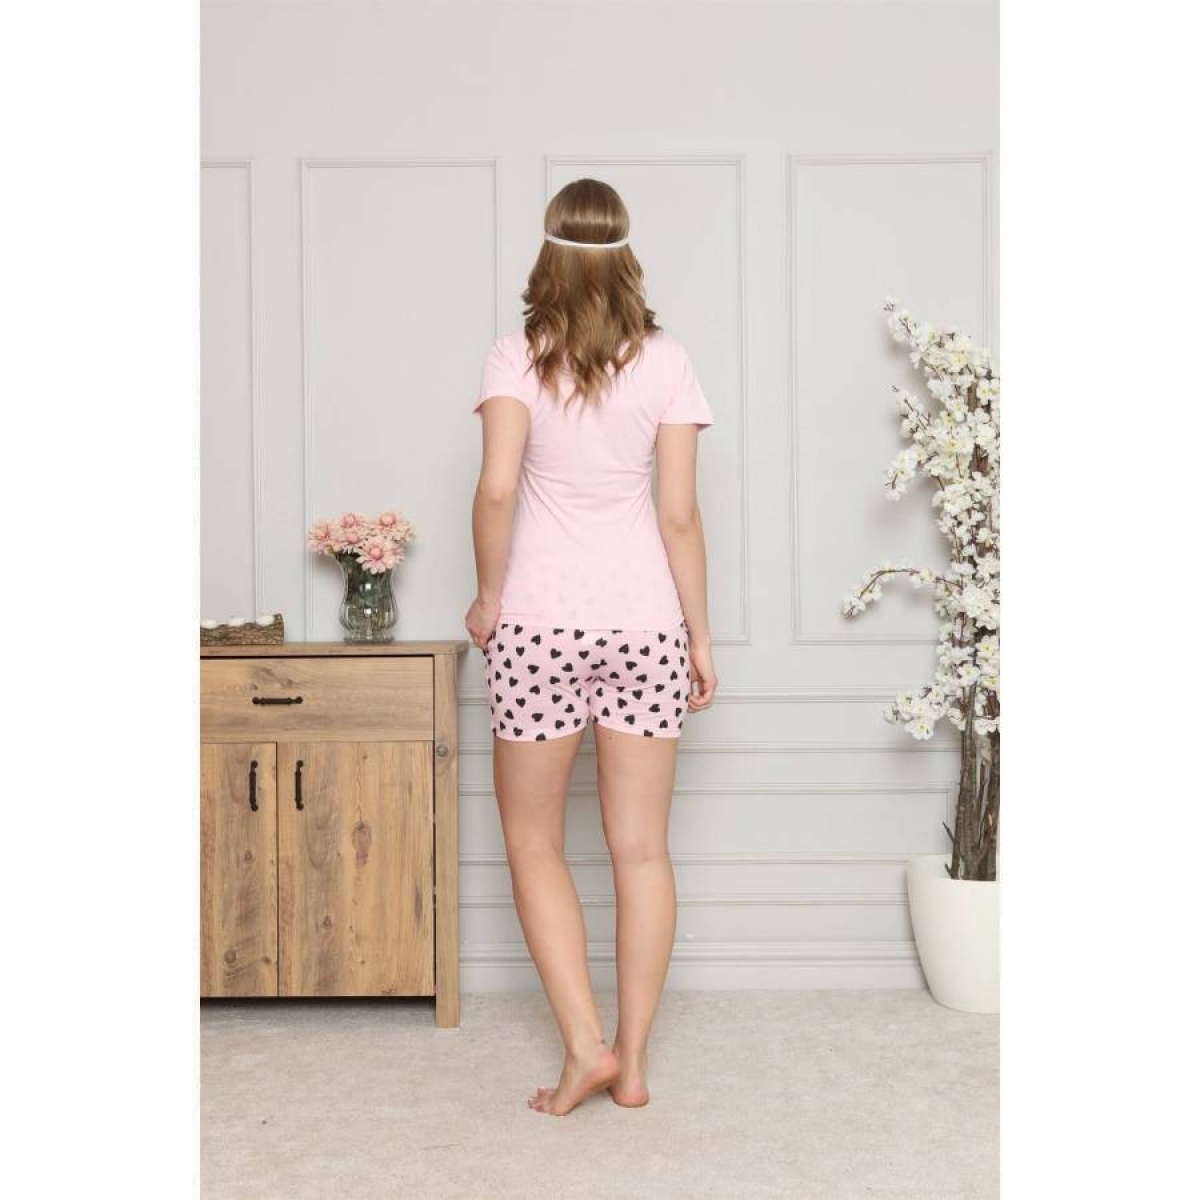 Flo Kadın %100 Pamuk Penye Kısa Kol Şortlu Pijama Takım 4322. 1